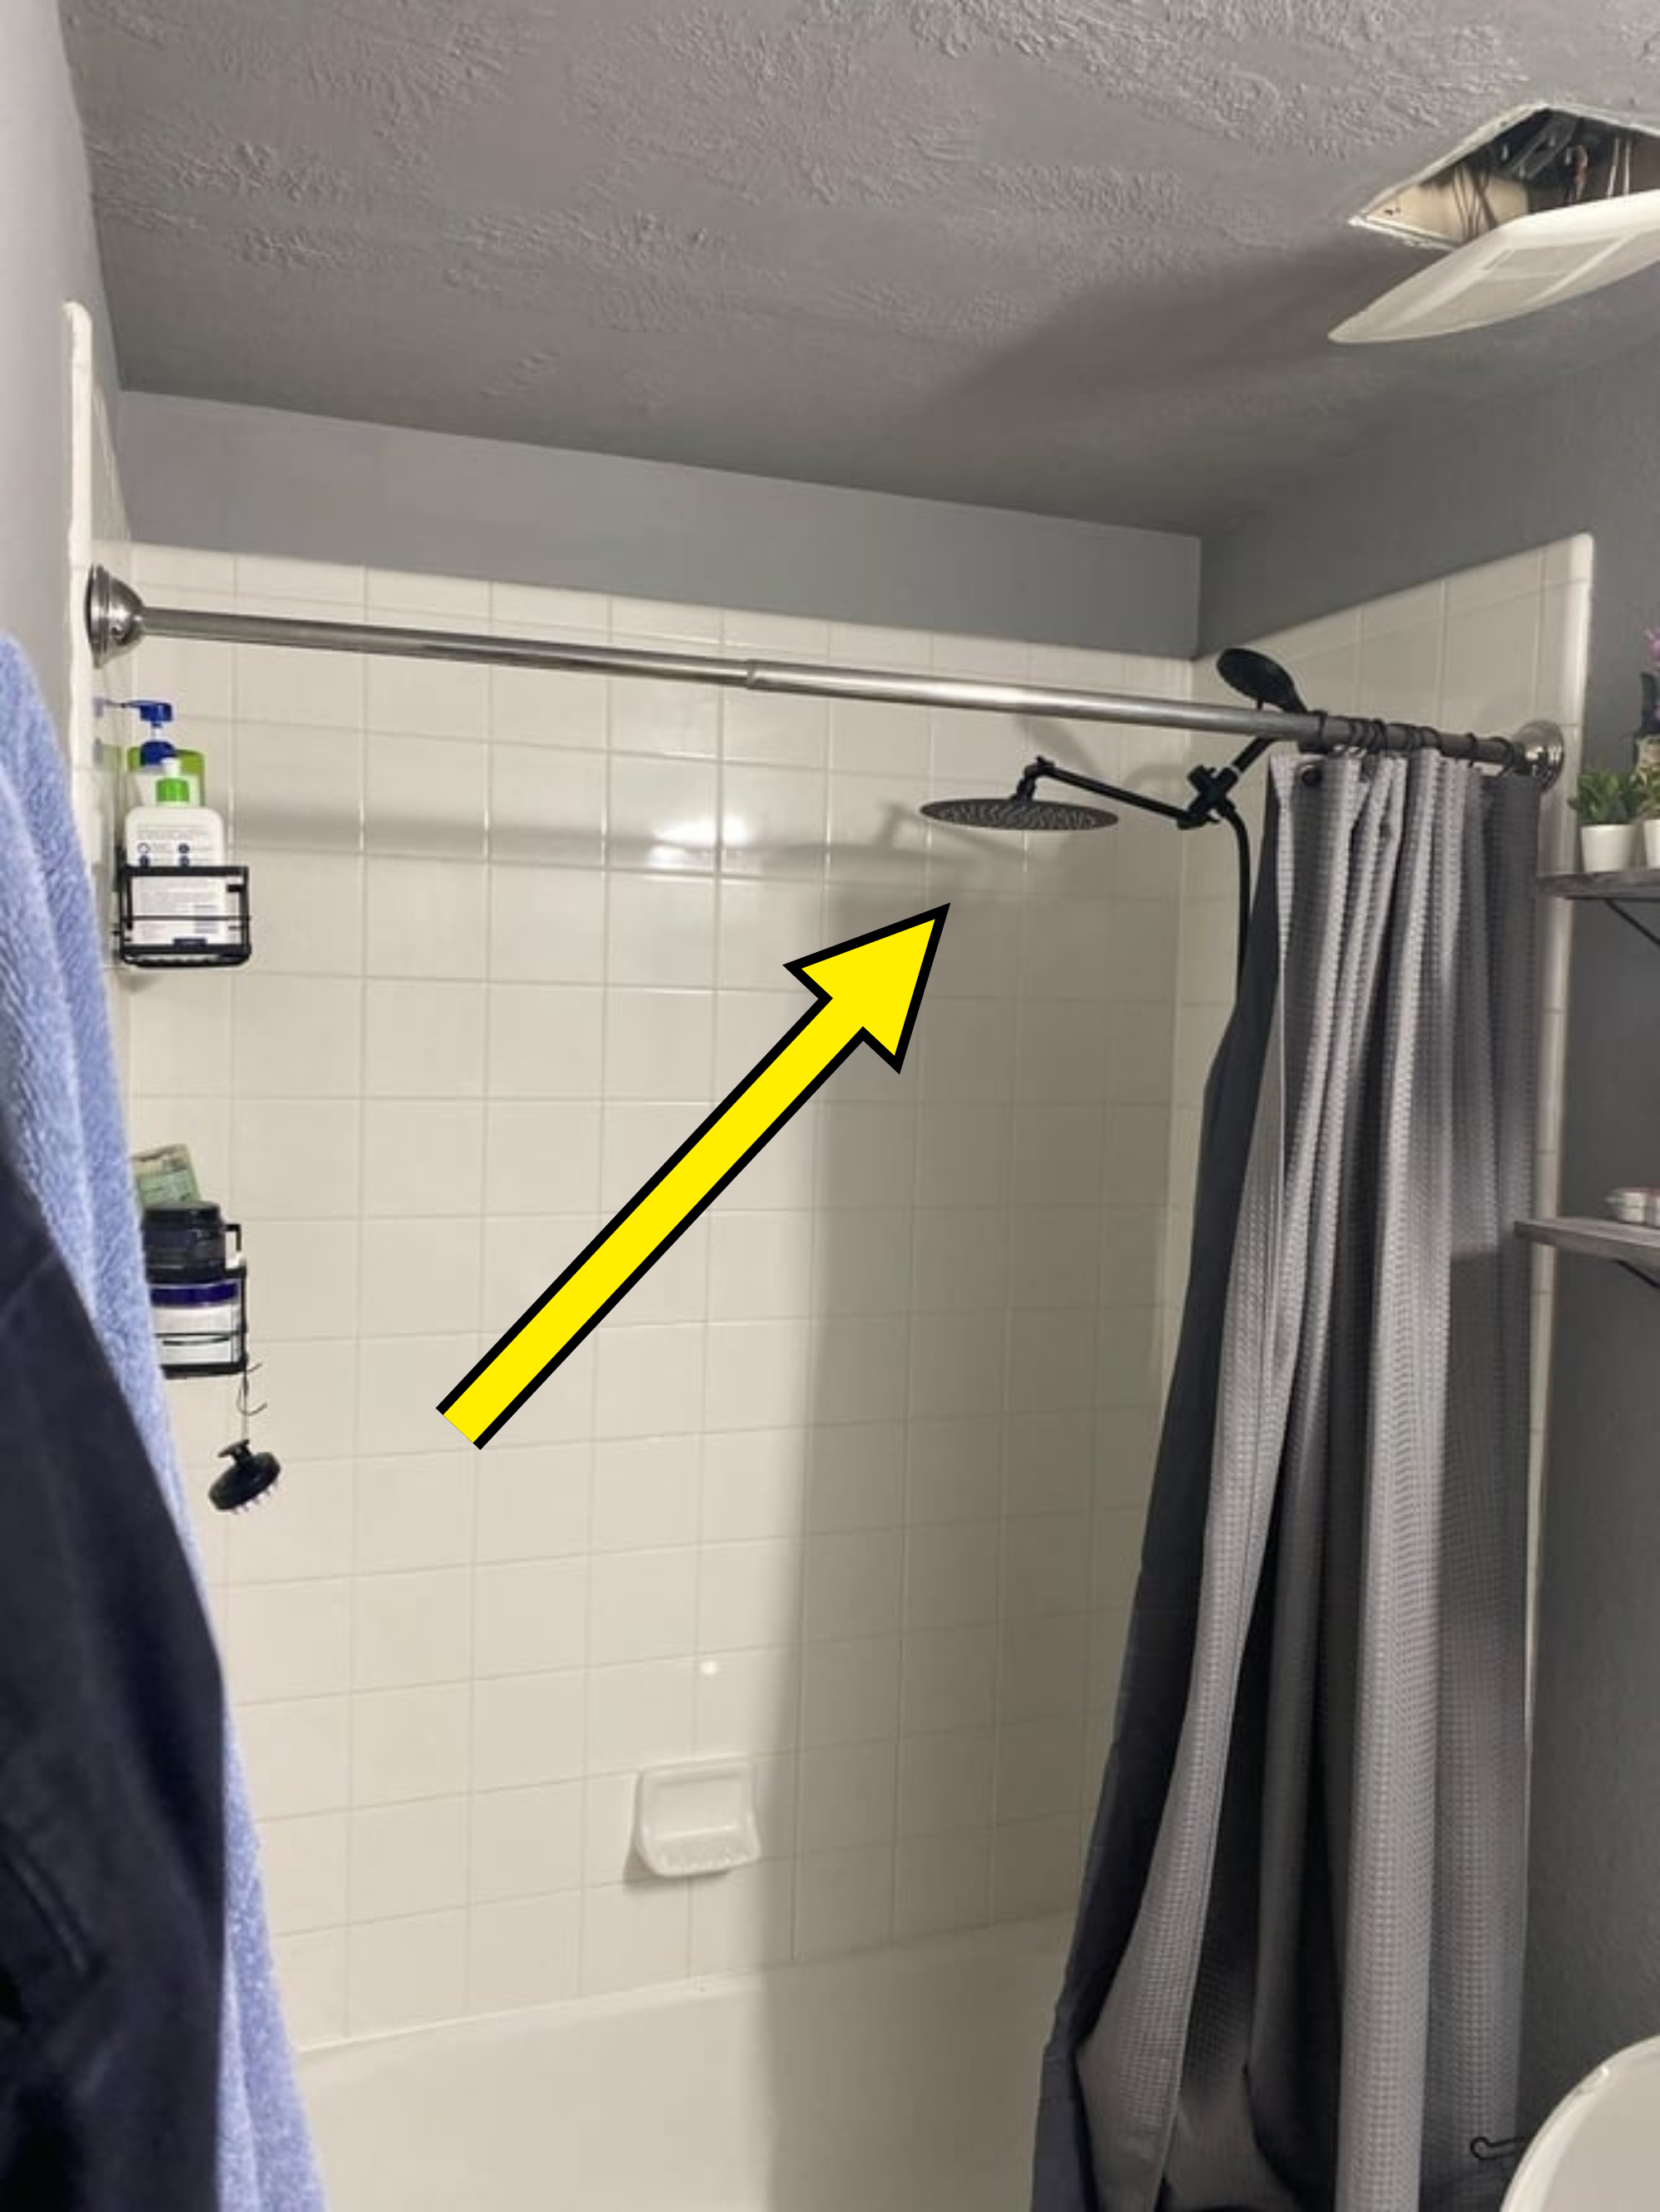 rain showerhead in a shower stall